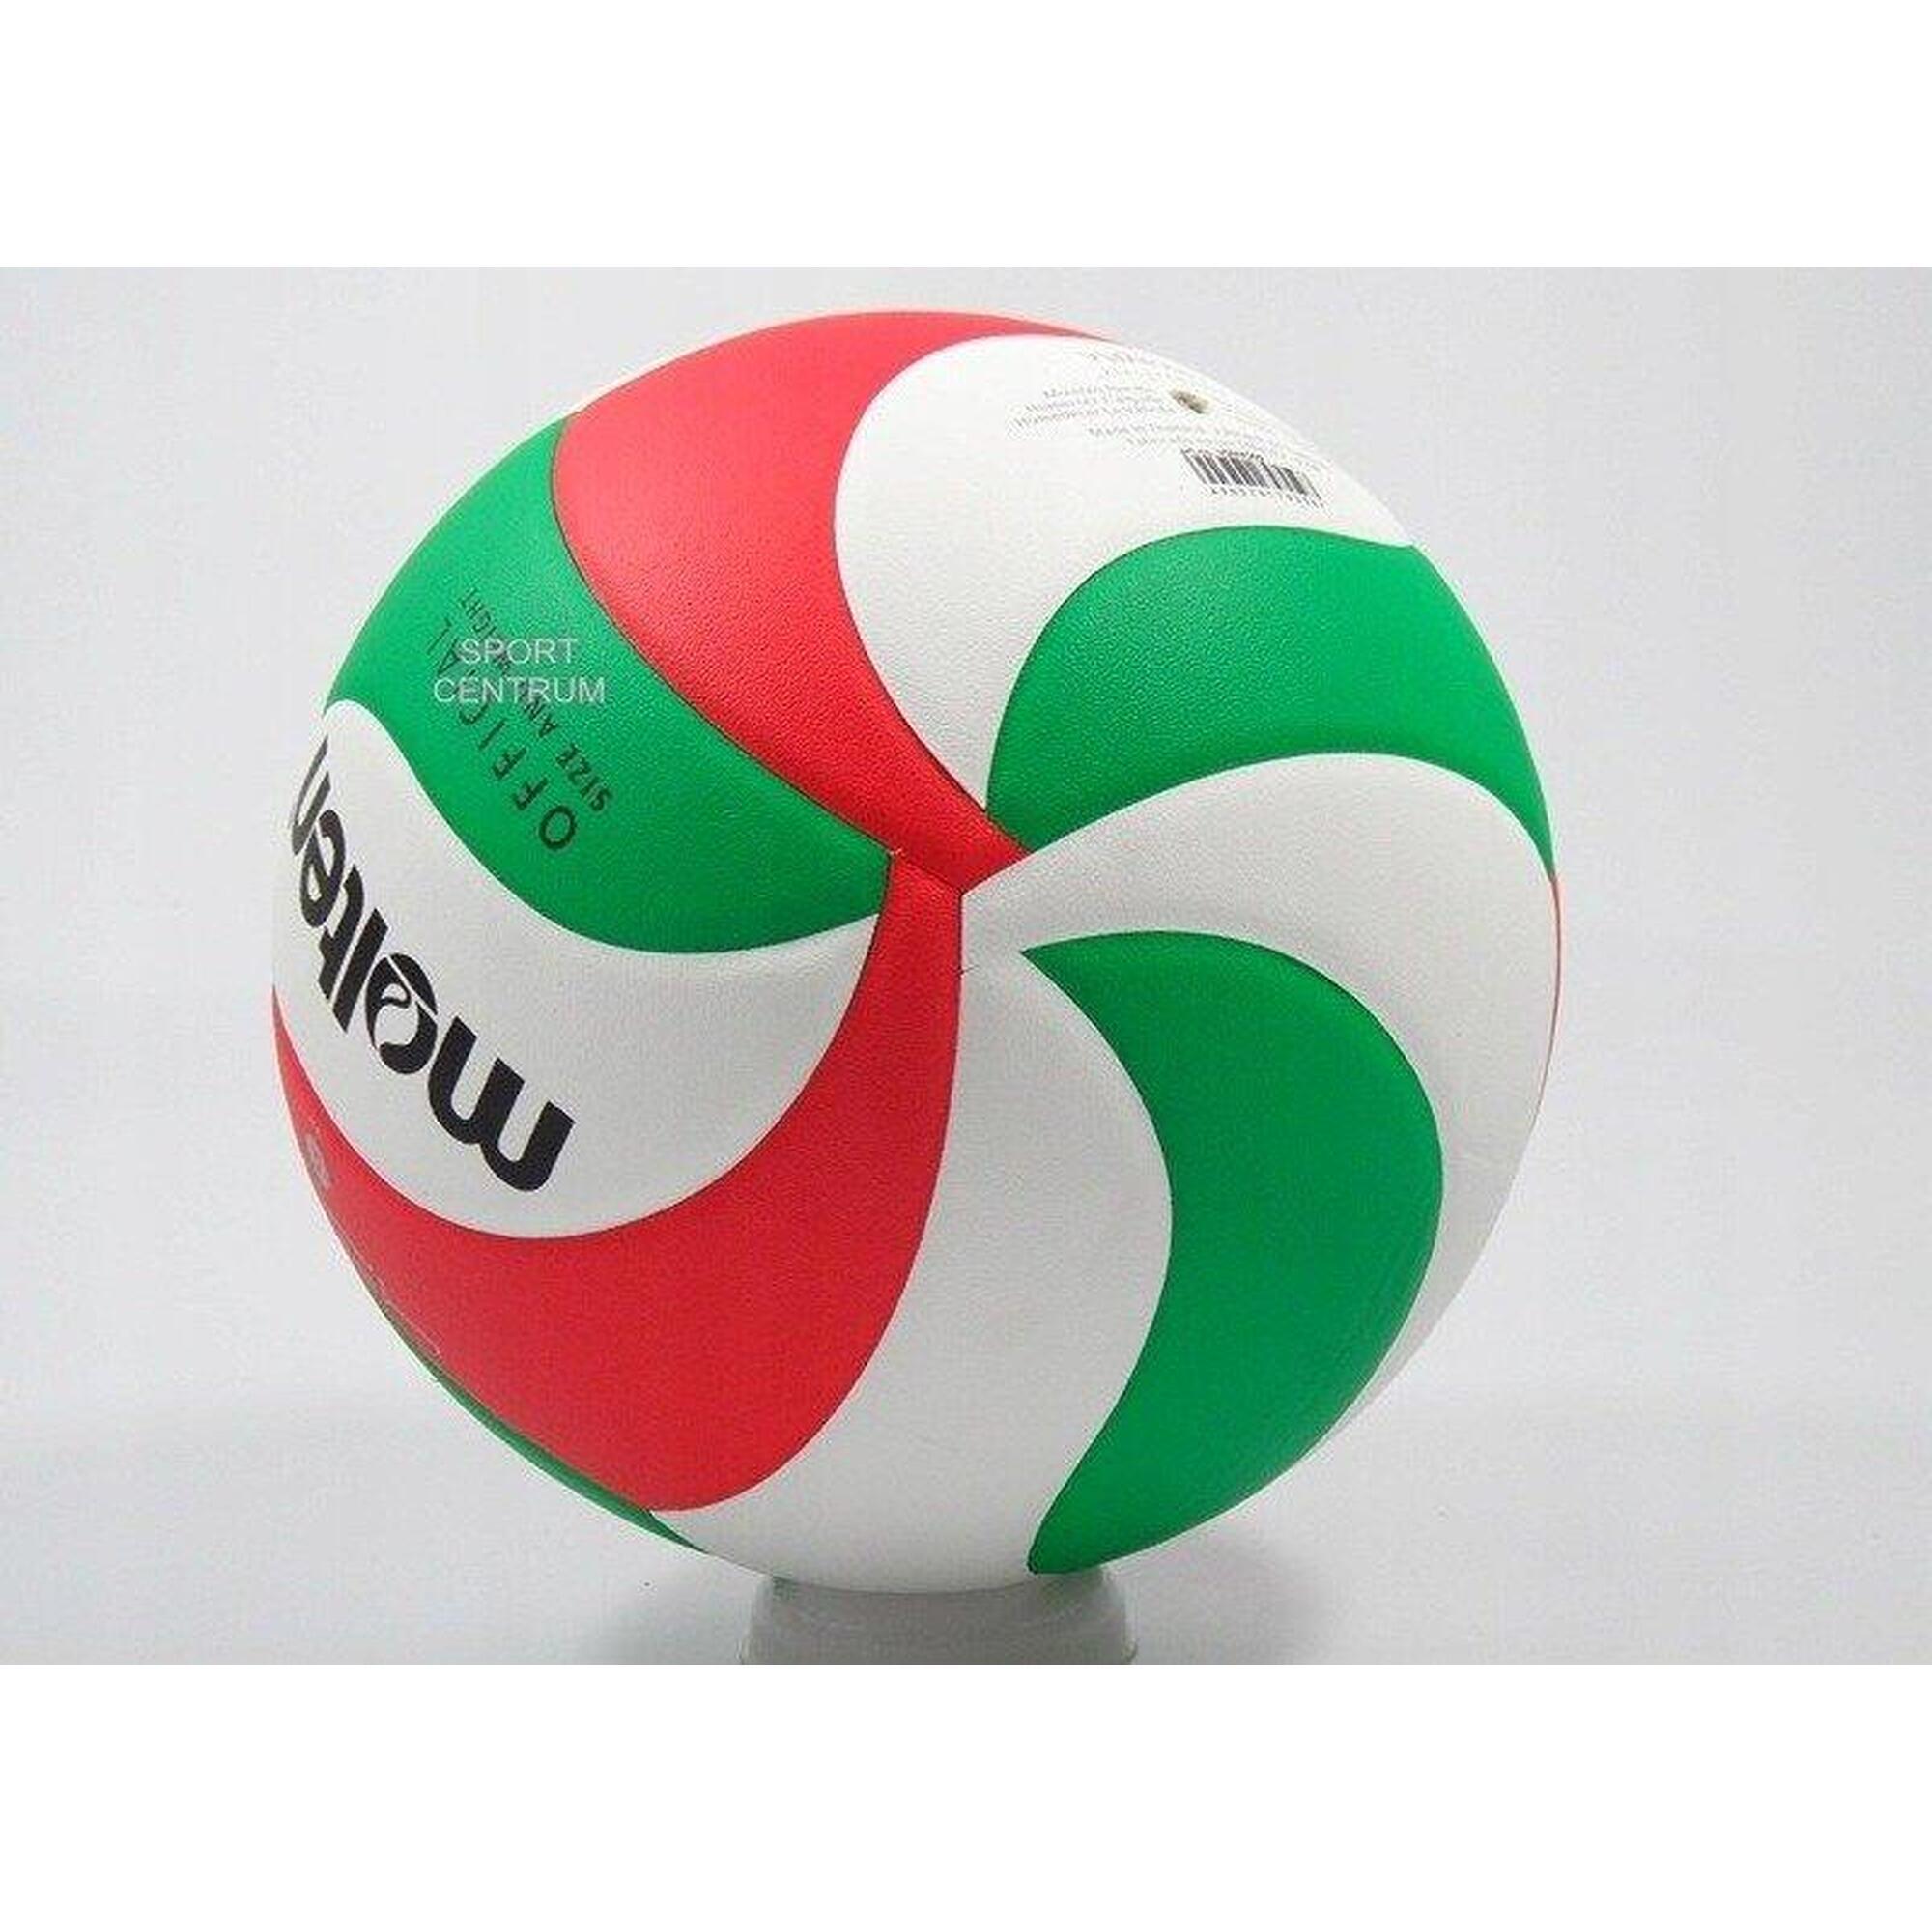 Molten V5M4500-volleybal